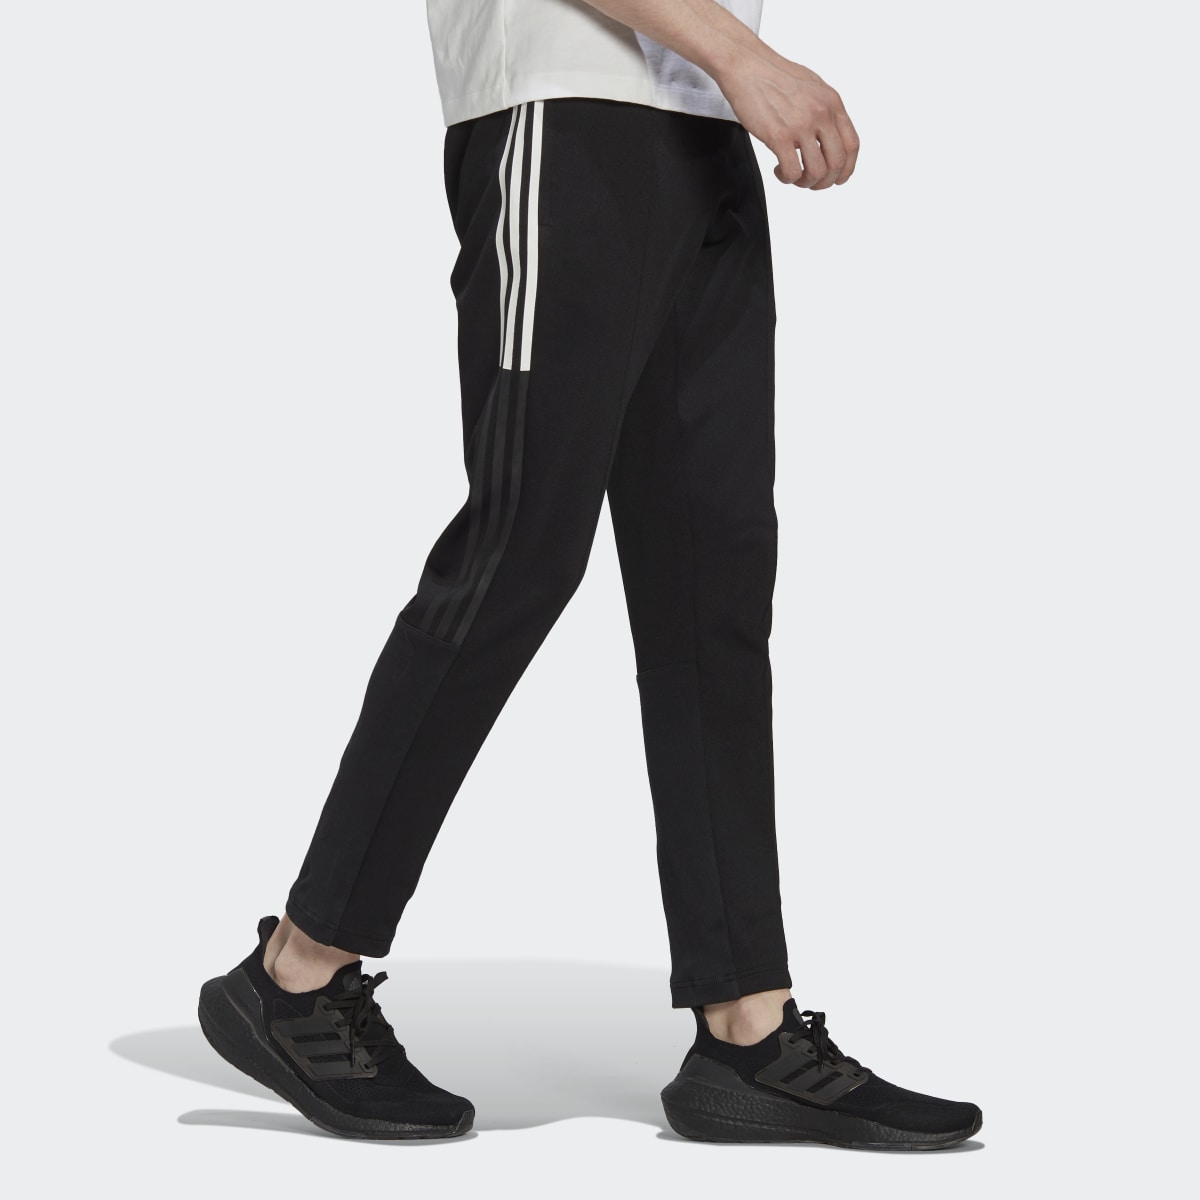 Adidas 3-Stripes Cuffed Pants. 4